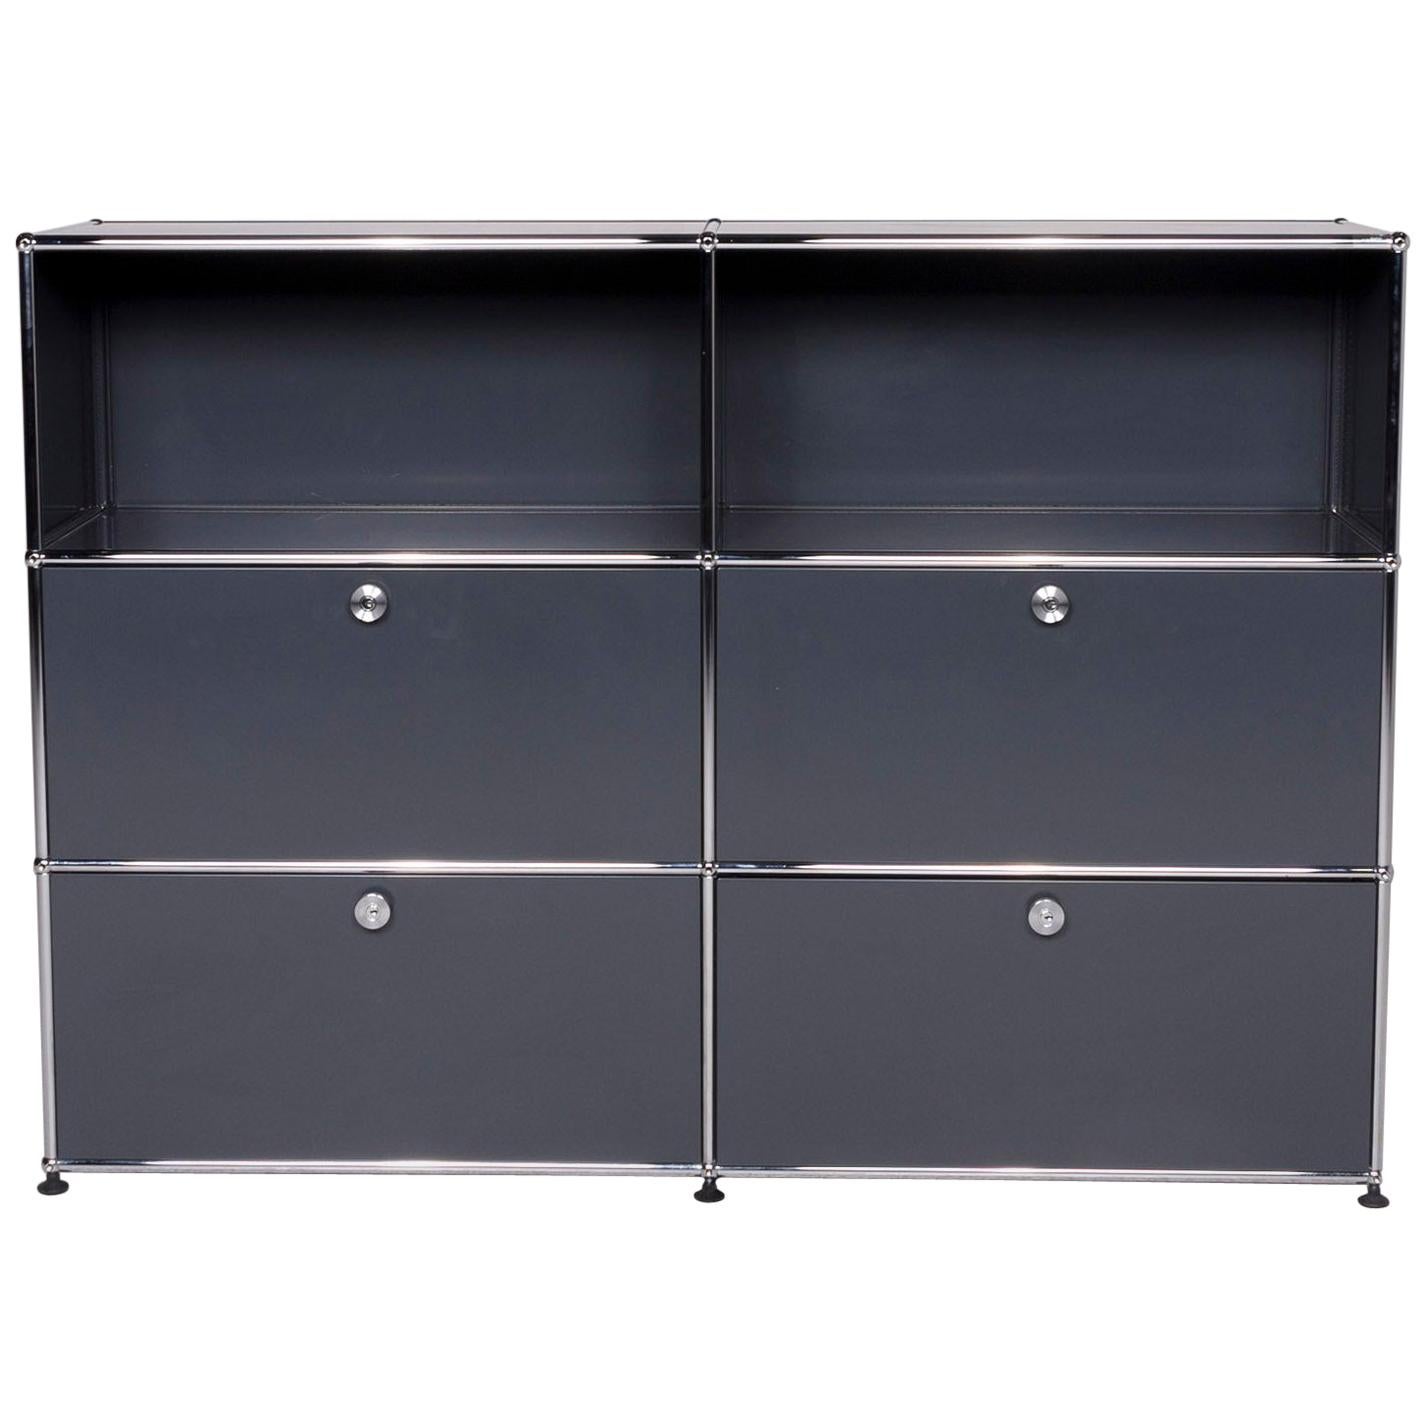 USM Haller Metal Sideboard Shelf Gray 4 Drawers